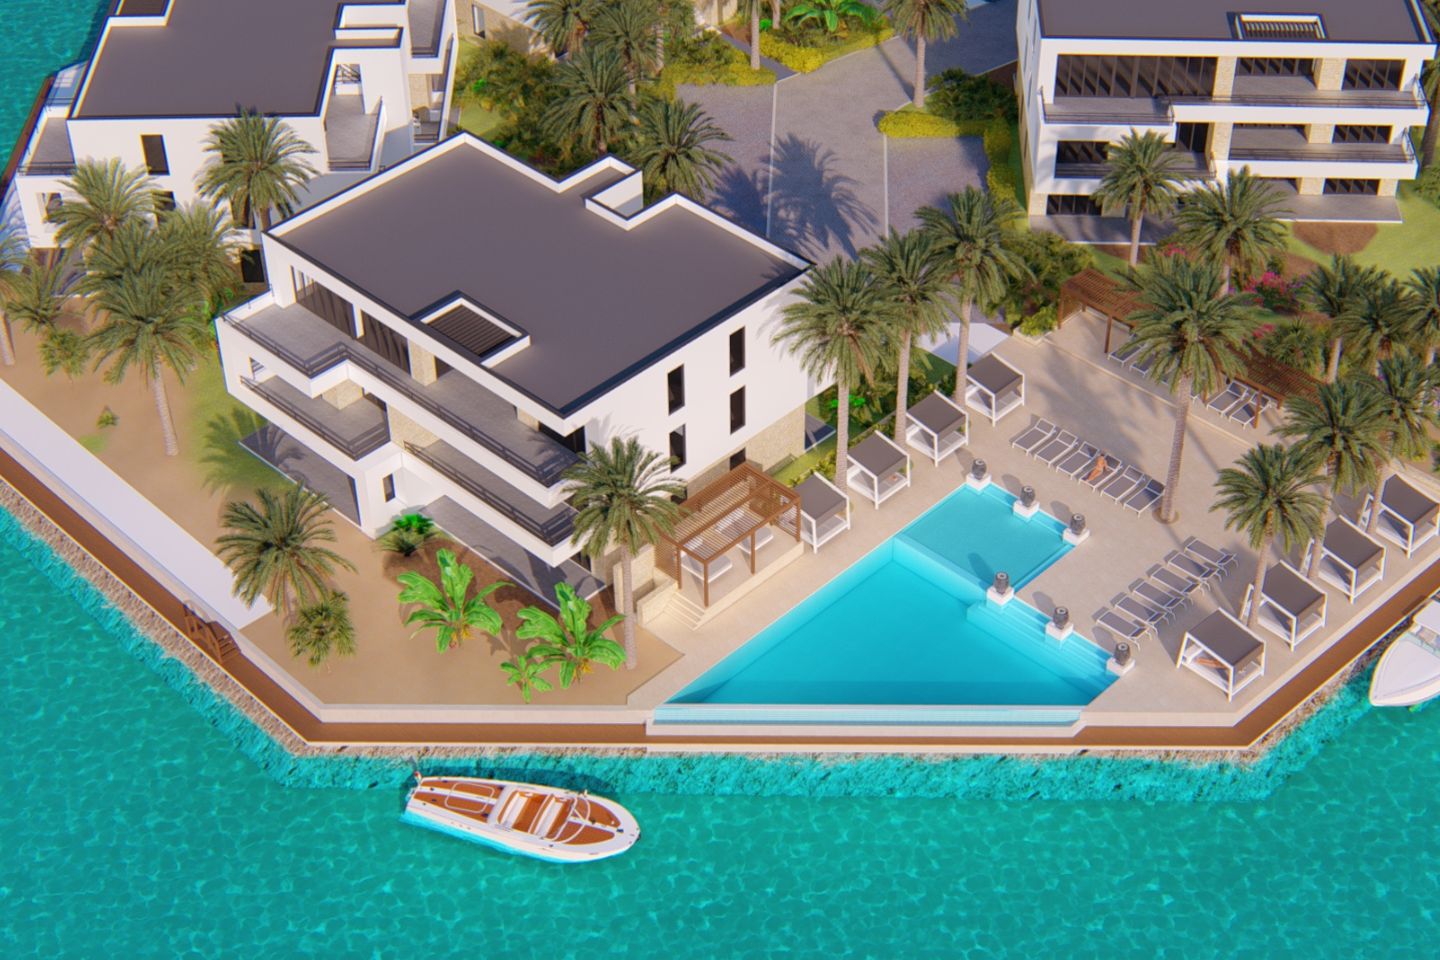 Plaza Beach Resort Bonaire appartementen AG architecten